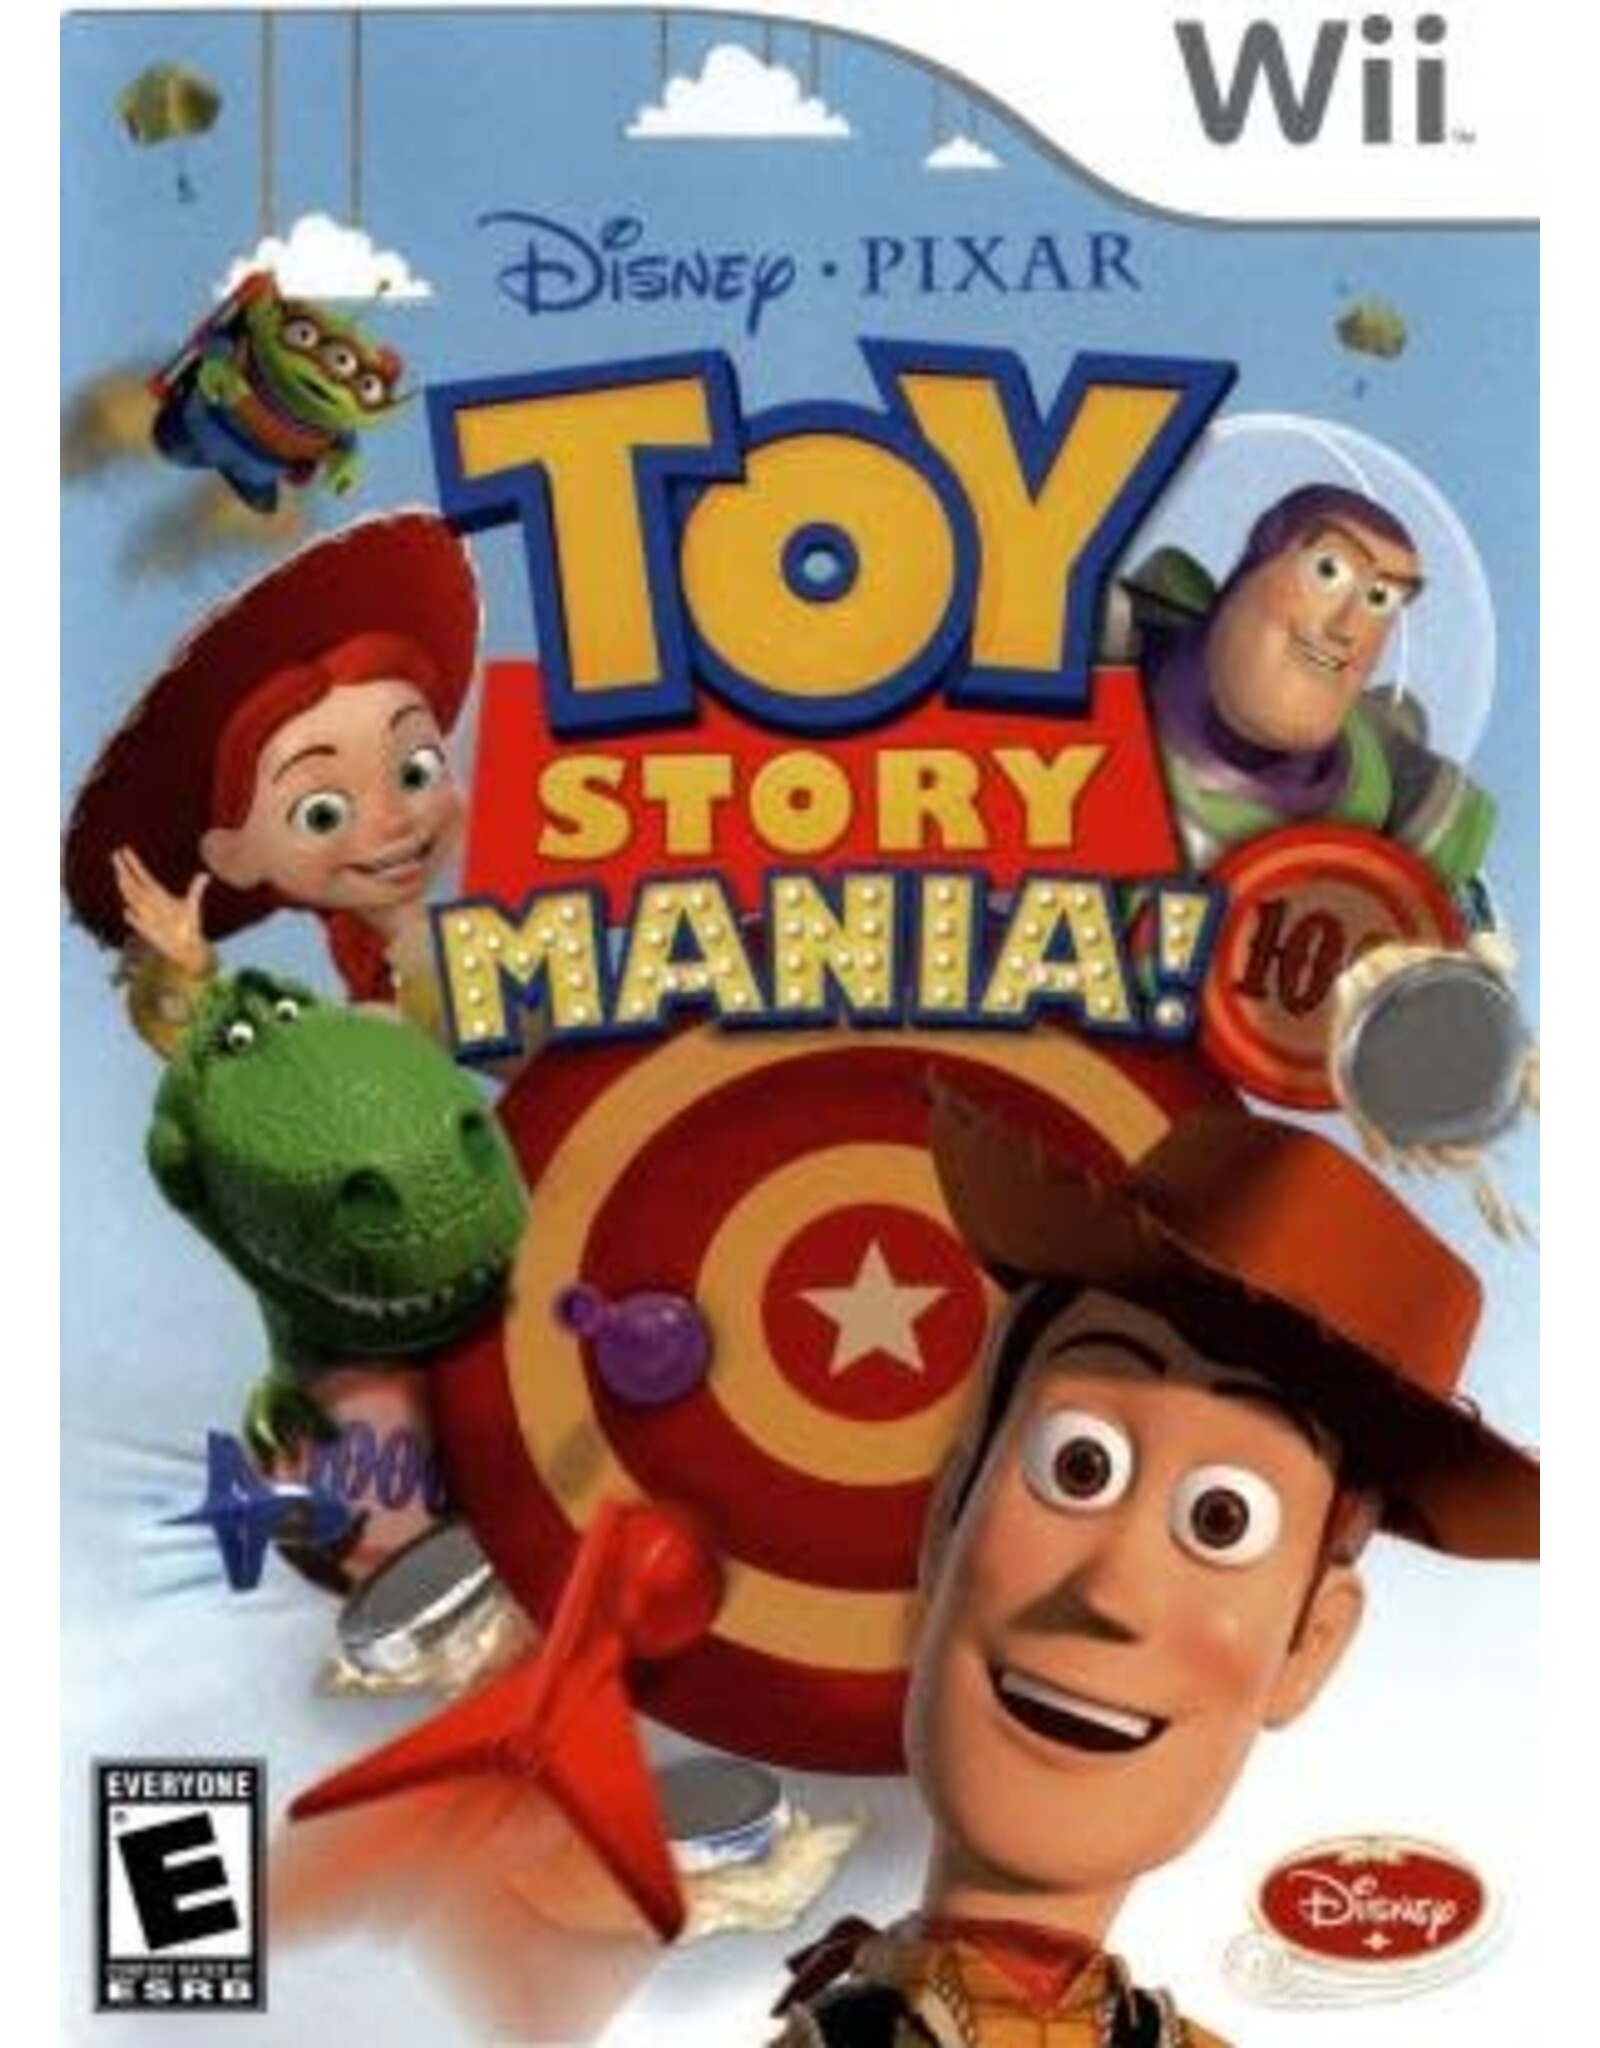 Wii Toy Story Mania (CiB)